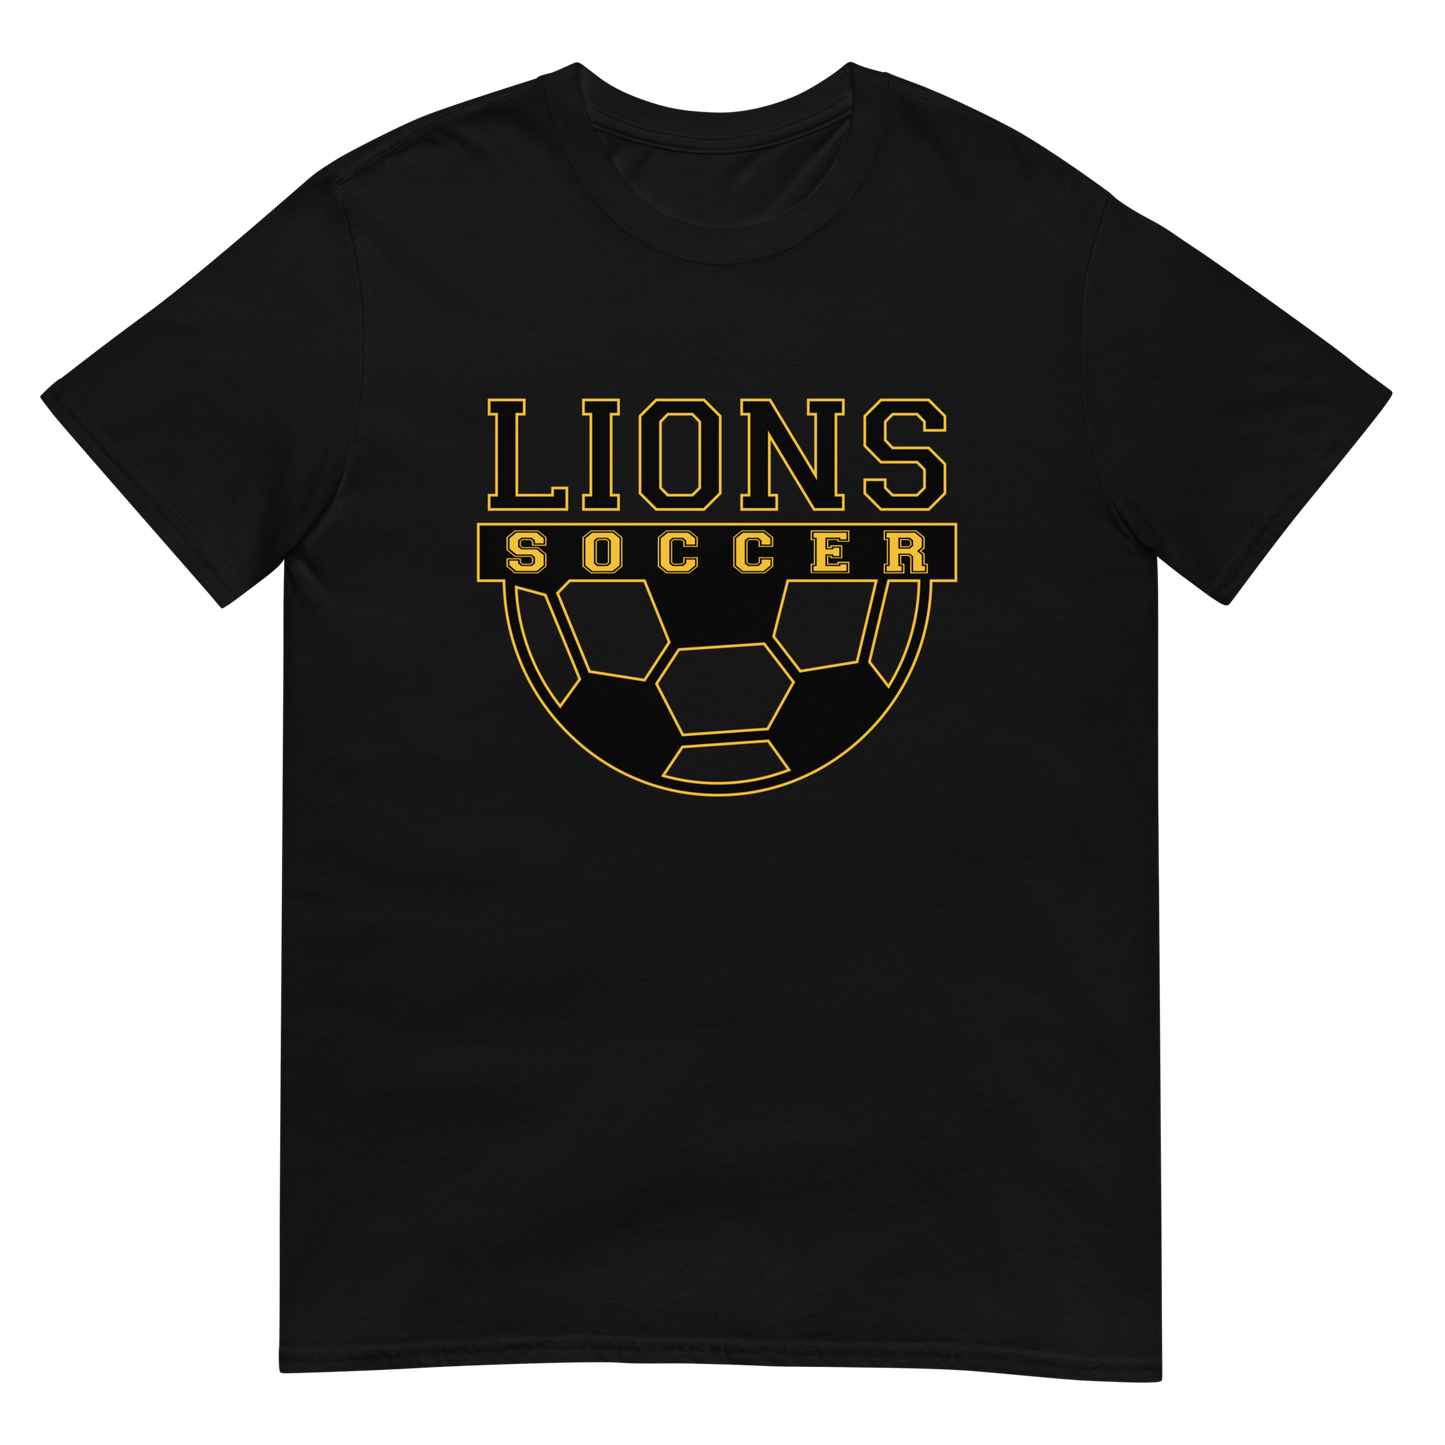 Lions Soccer Short-Sleeve Unisex T-Shirt